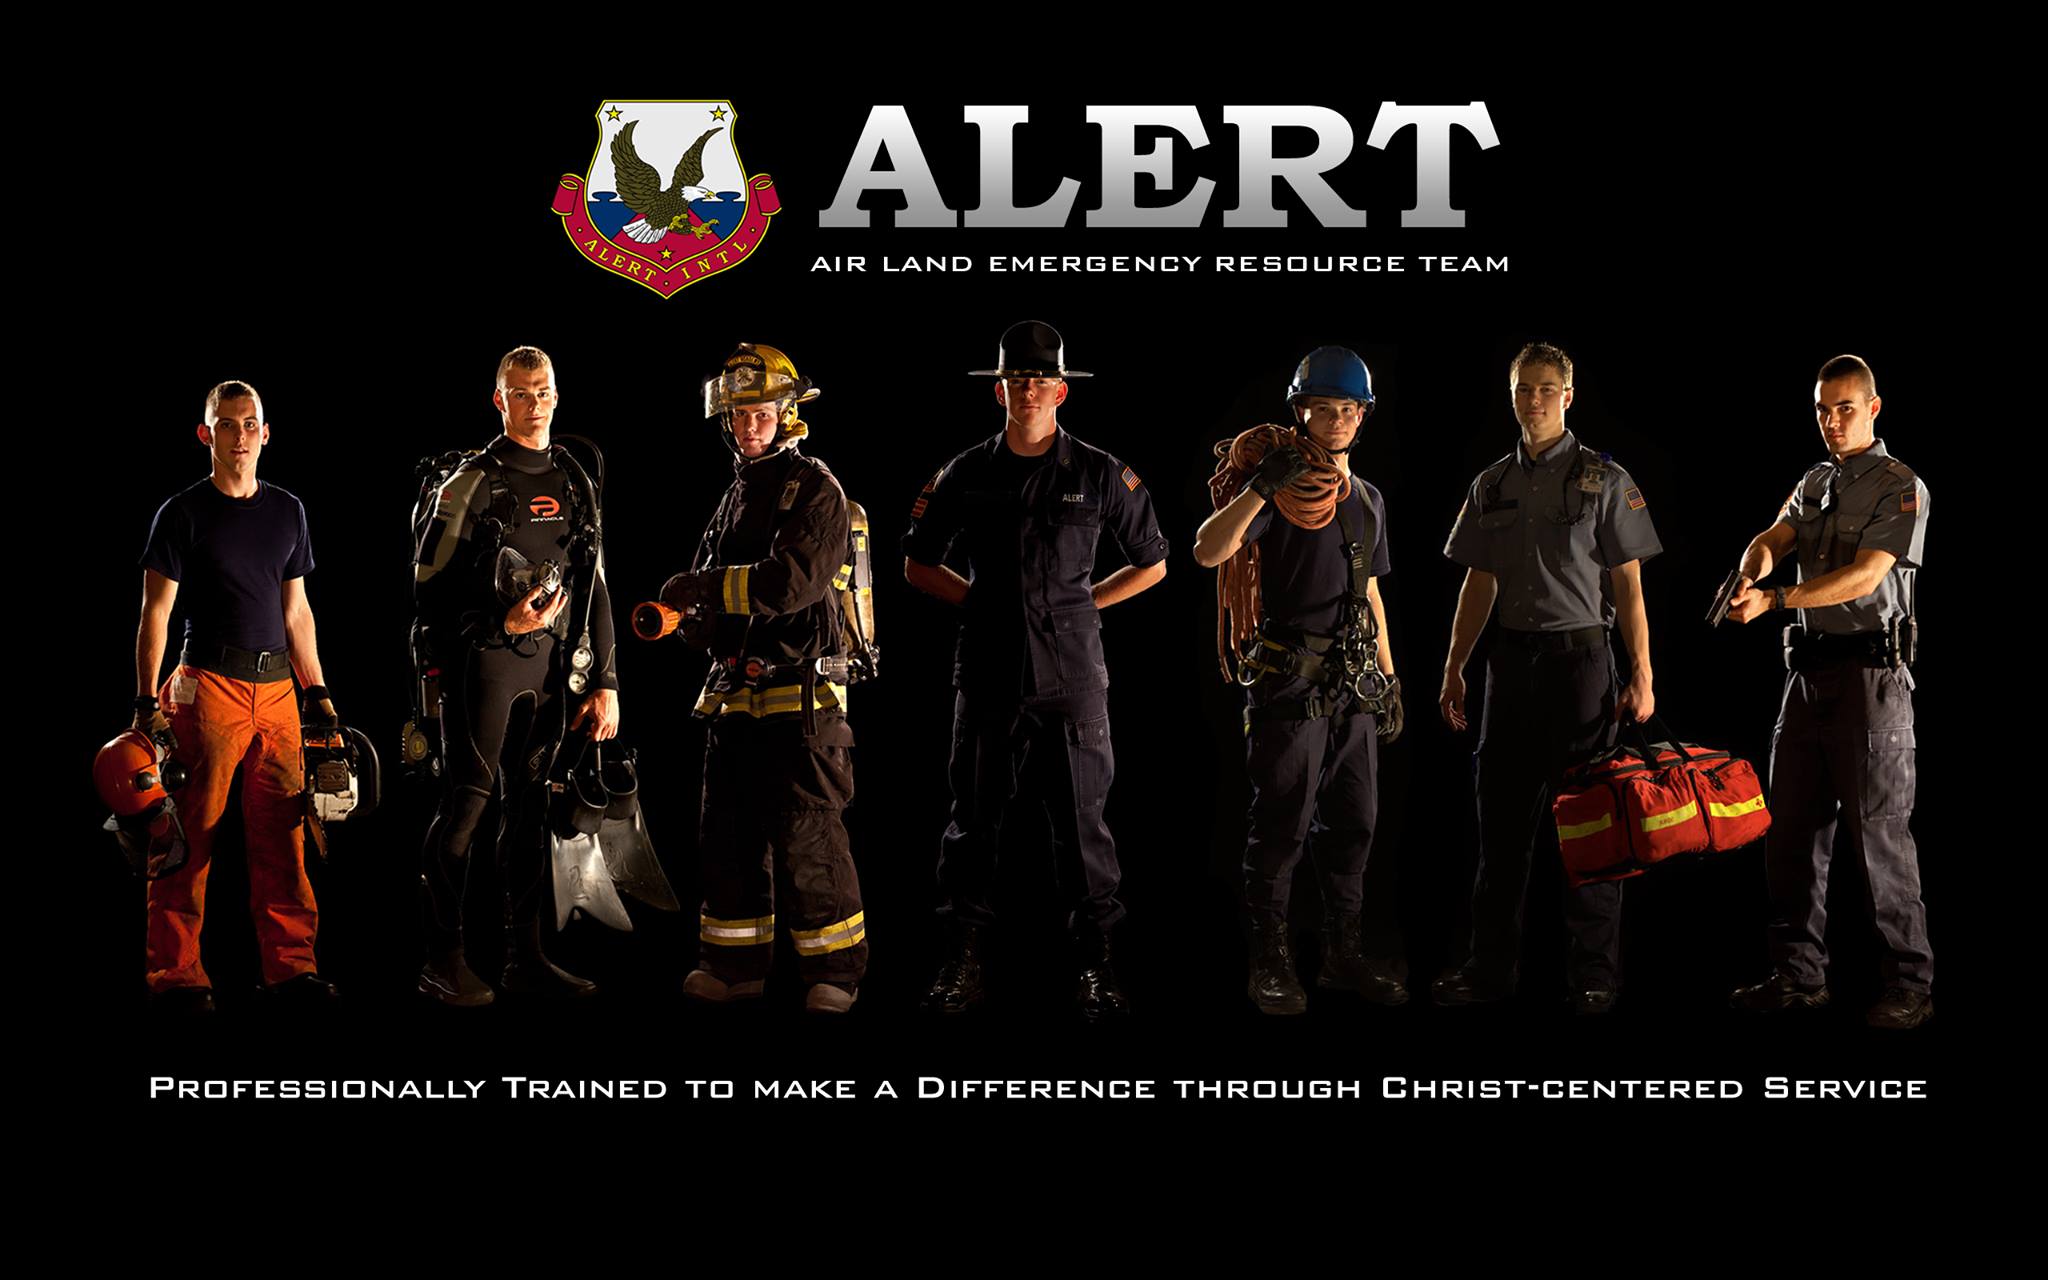 International ALERT Academy - Air, Land, Emergency Resource Team